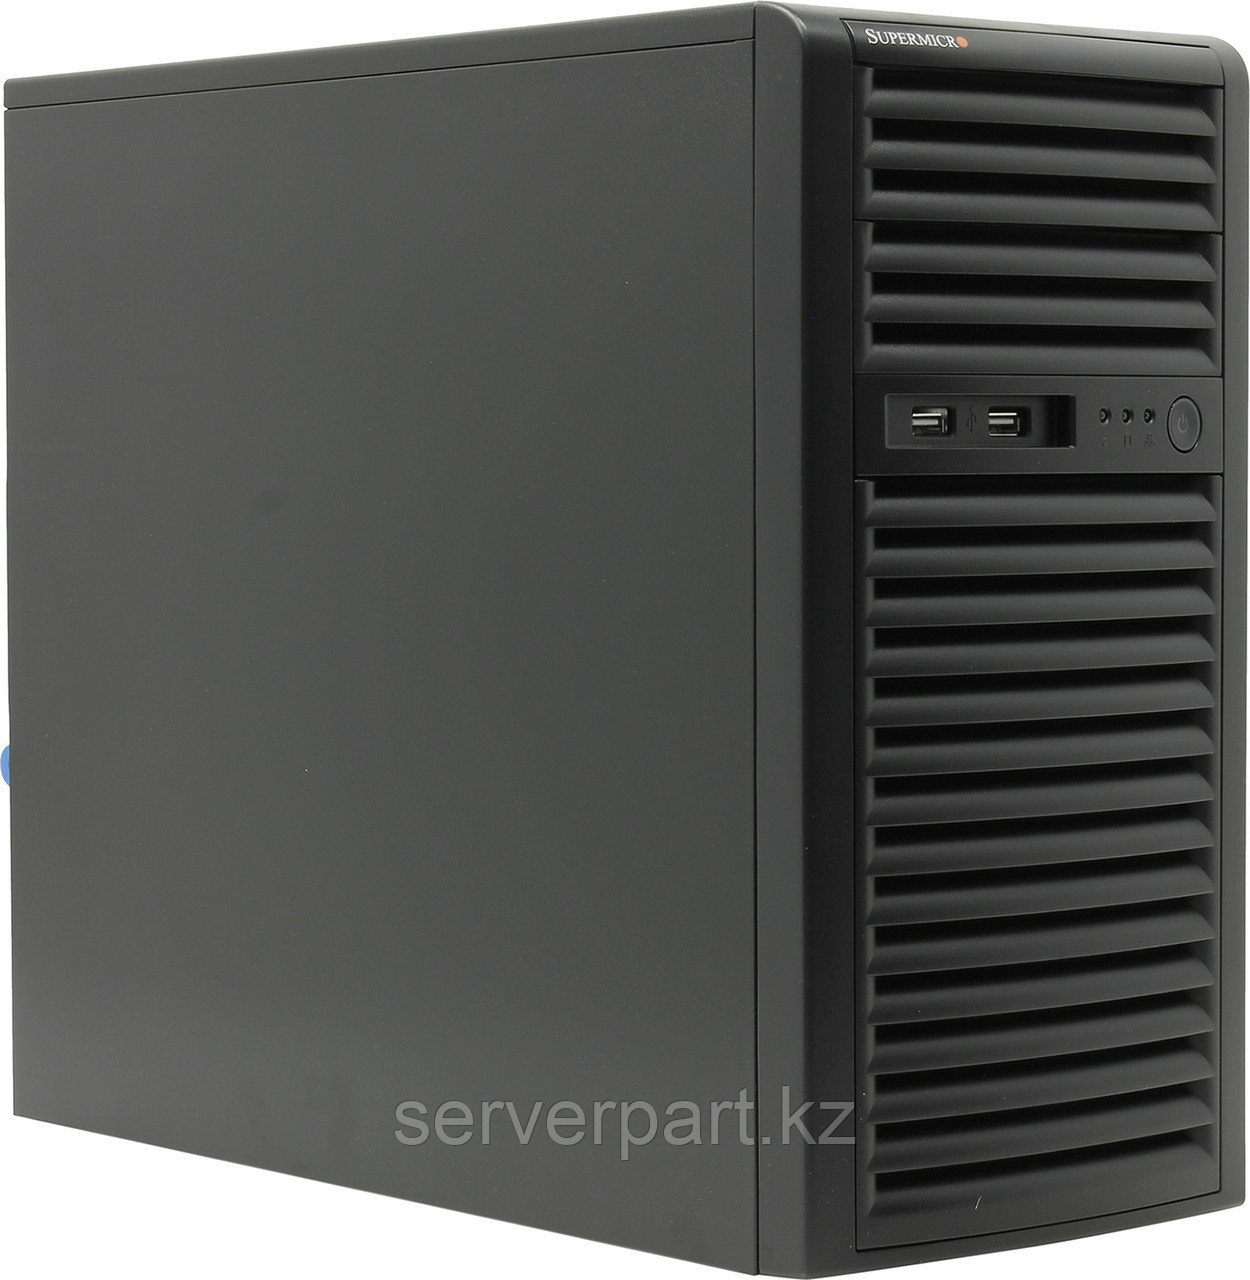 Сервер Supermicro SYS-5039D Tower/4-core intel xeon E3-1220v6 3GHz/32GB UDIMM nECC/1x480GB SSD MU Hyb, фото 1